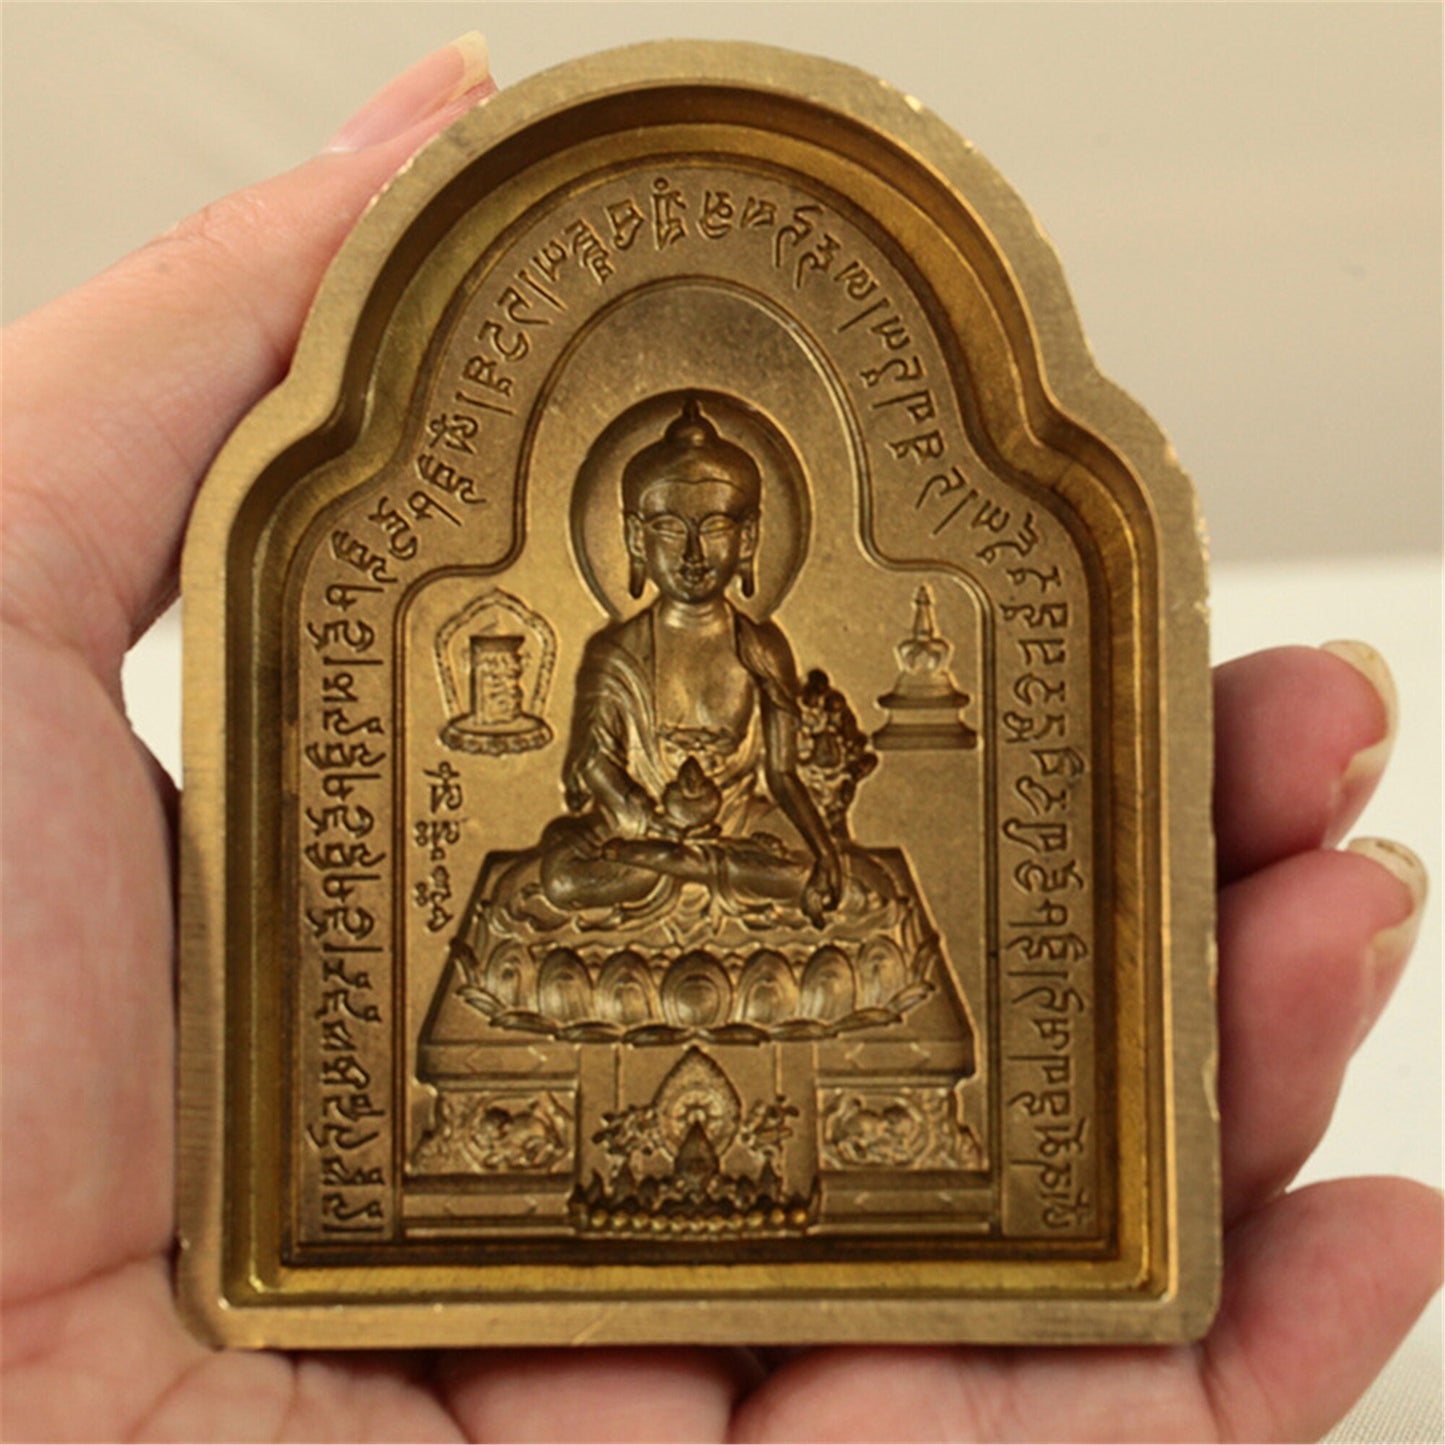 Gandhanra Handmade Tibetan Buddha Statue Mold,Bhaisajyaguru,Medicine Buddha,Copper Mould For Making Clay Buddha Statue,Tsa Tsa,Tsha Tsha